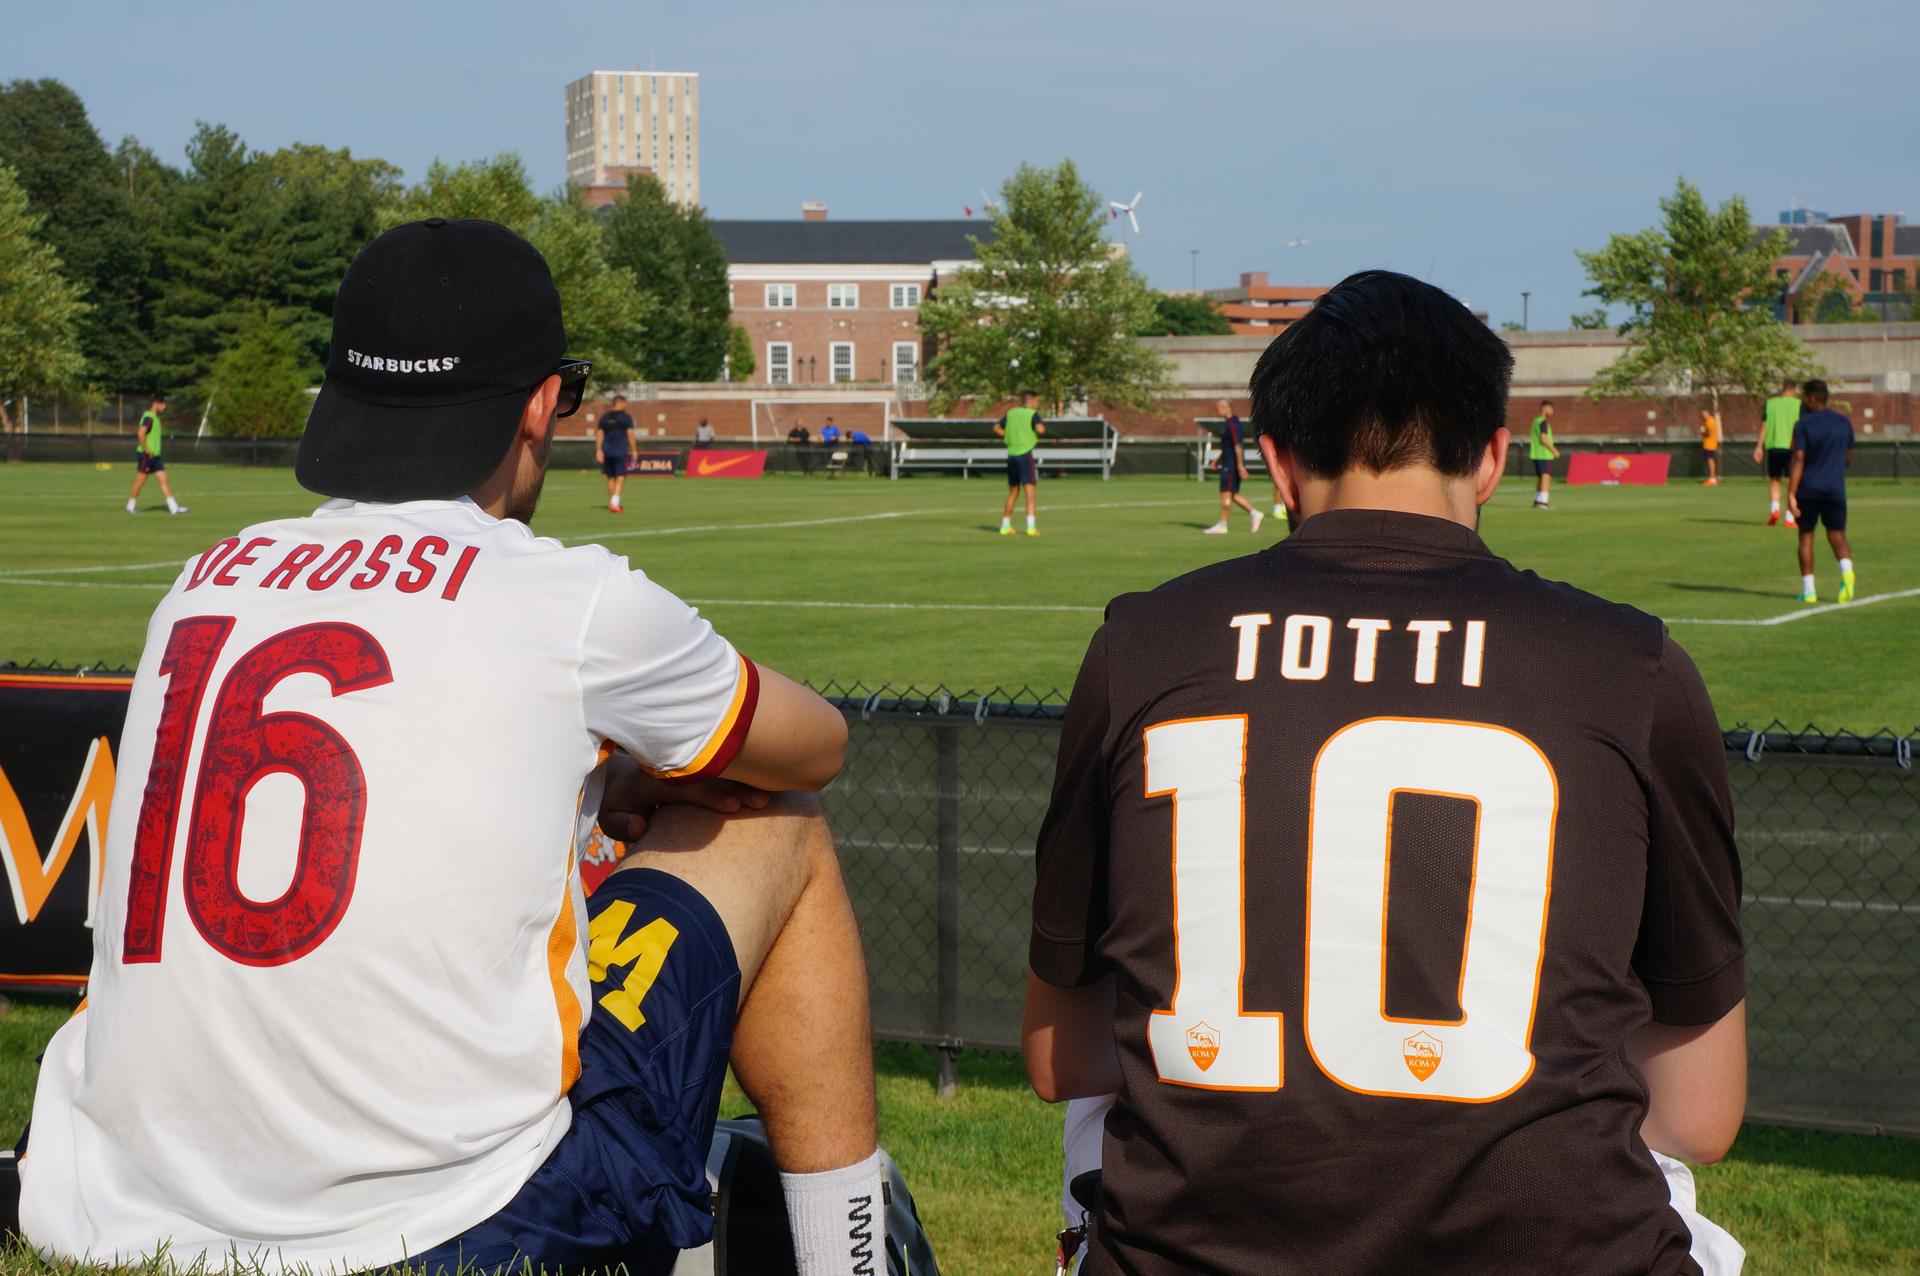 Two fans sporting De Rossi and Totti jerseys watch A.C. Roma train in Boston, Massachusetts July 28, 2016.